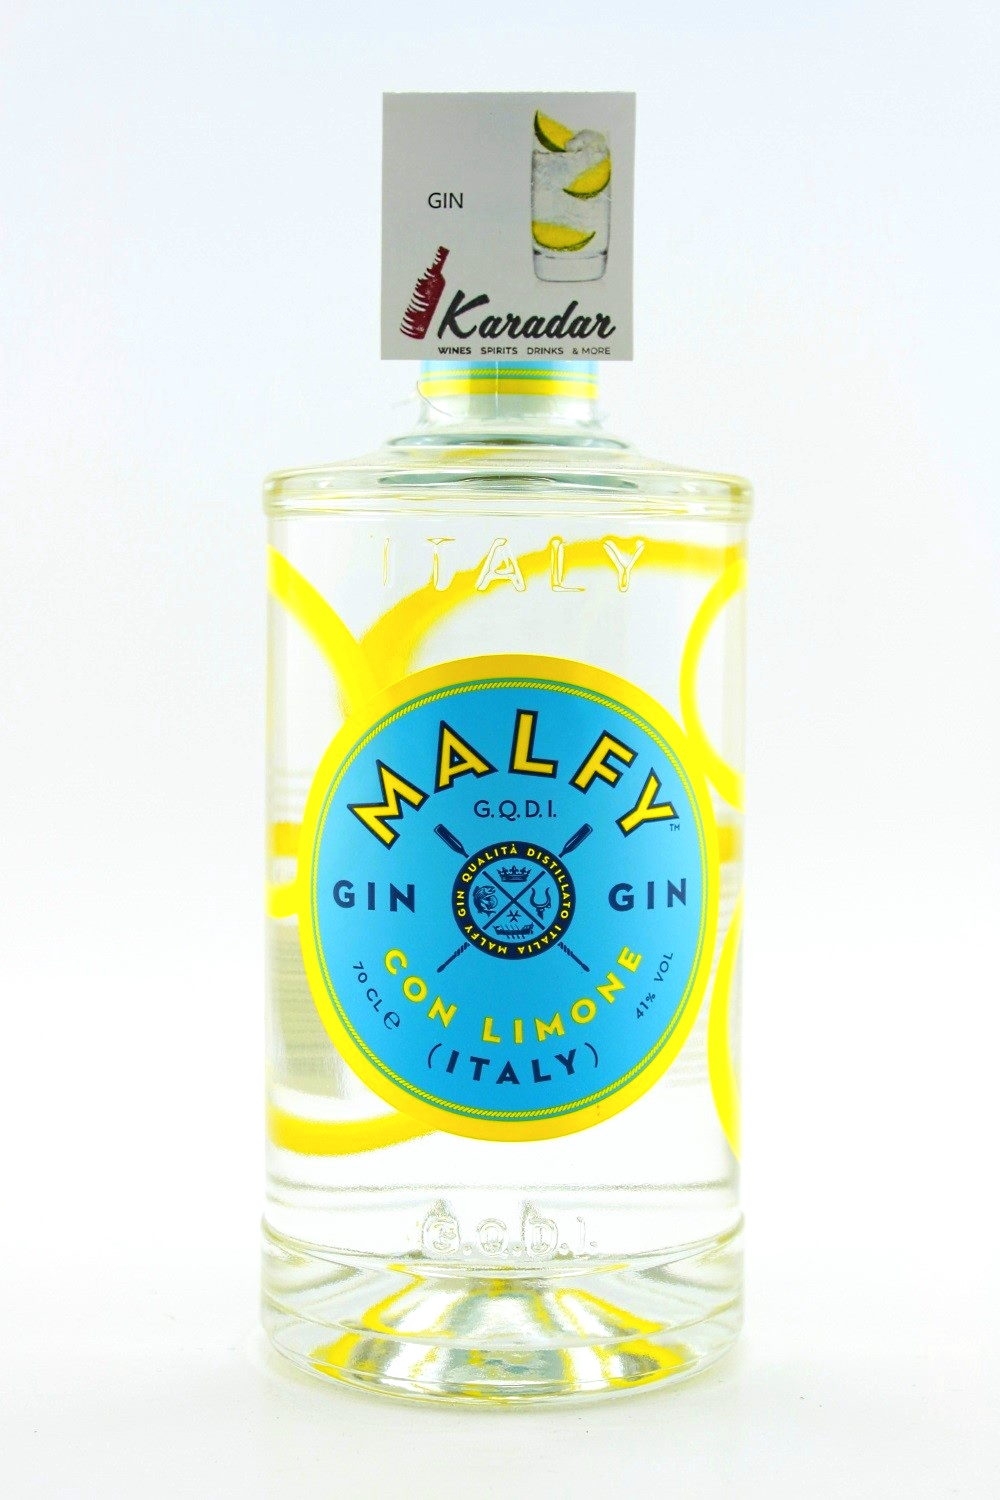 Malfy Italian Gin whit Lemon 41% vol. Gin